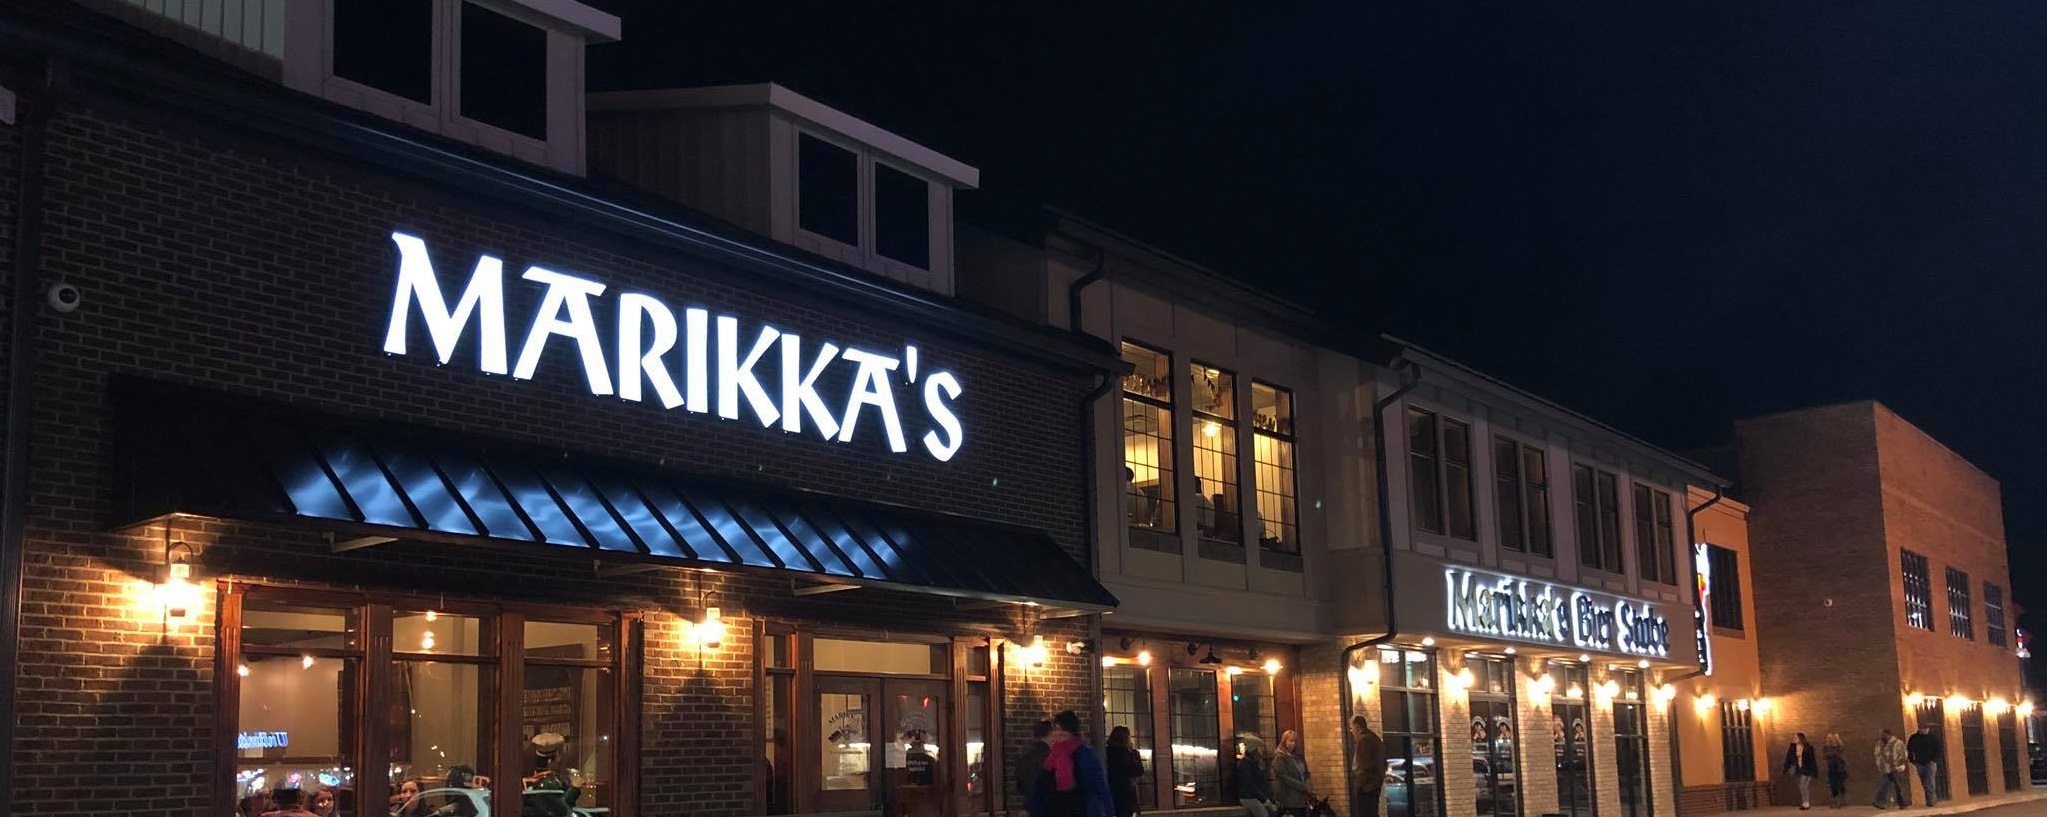 Marikka’s Restaurant